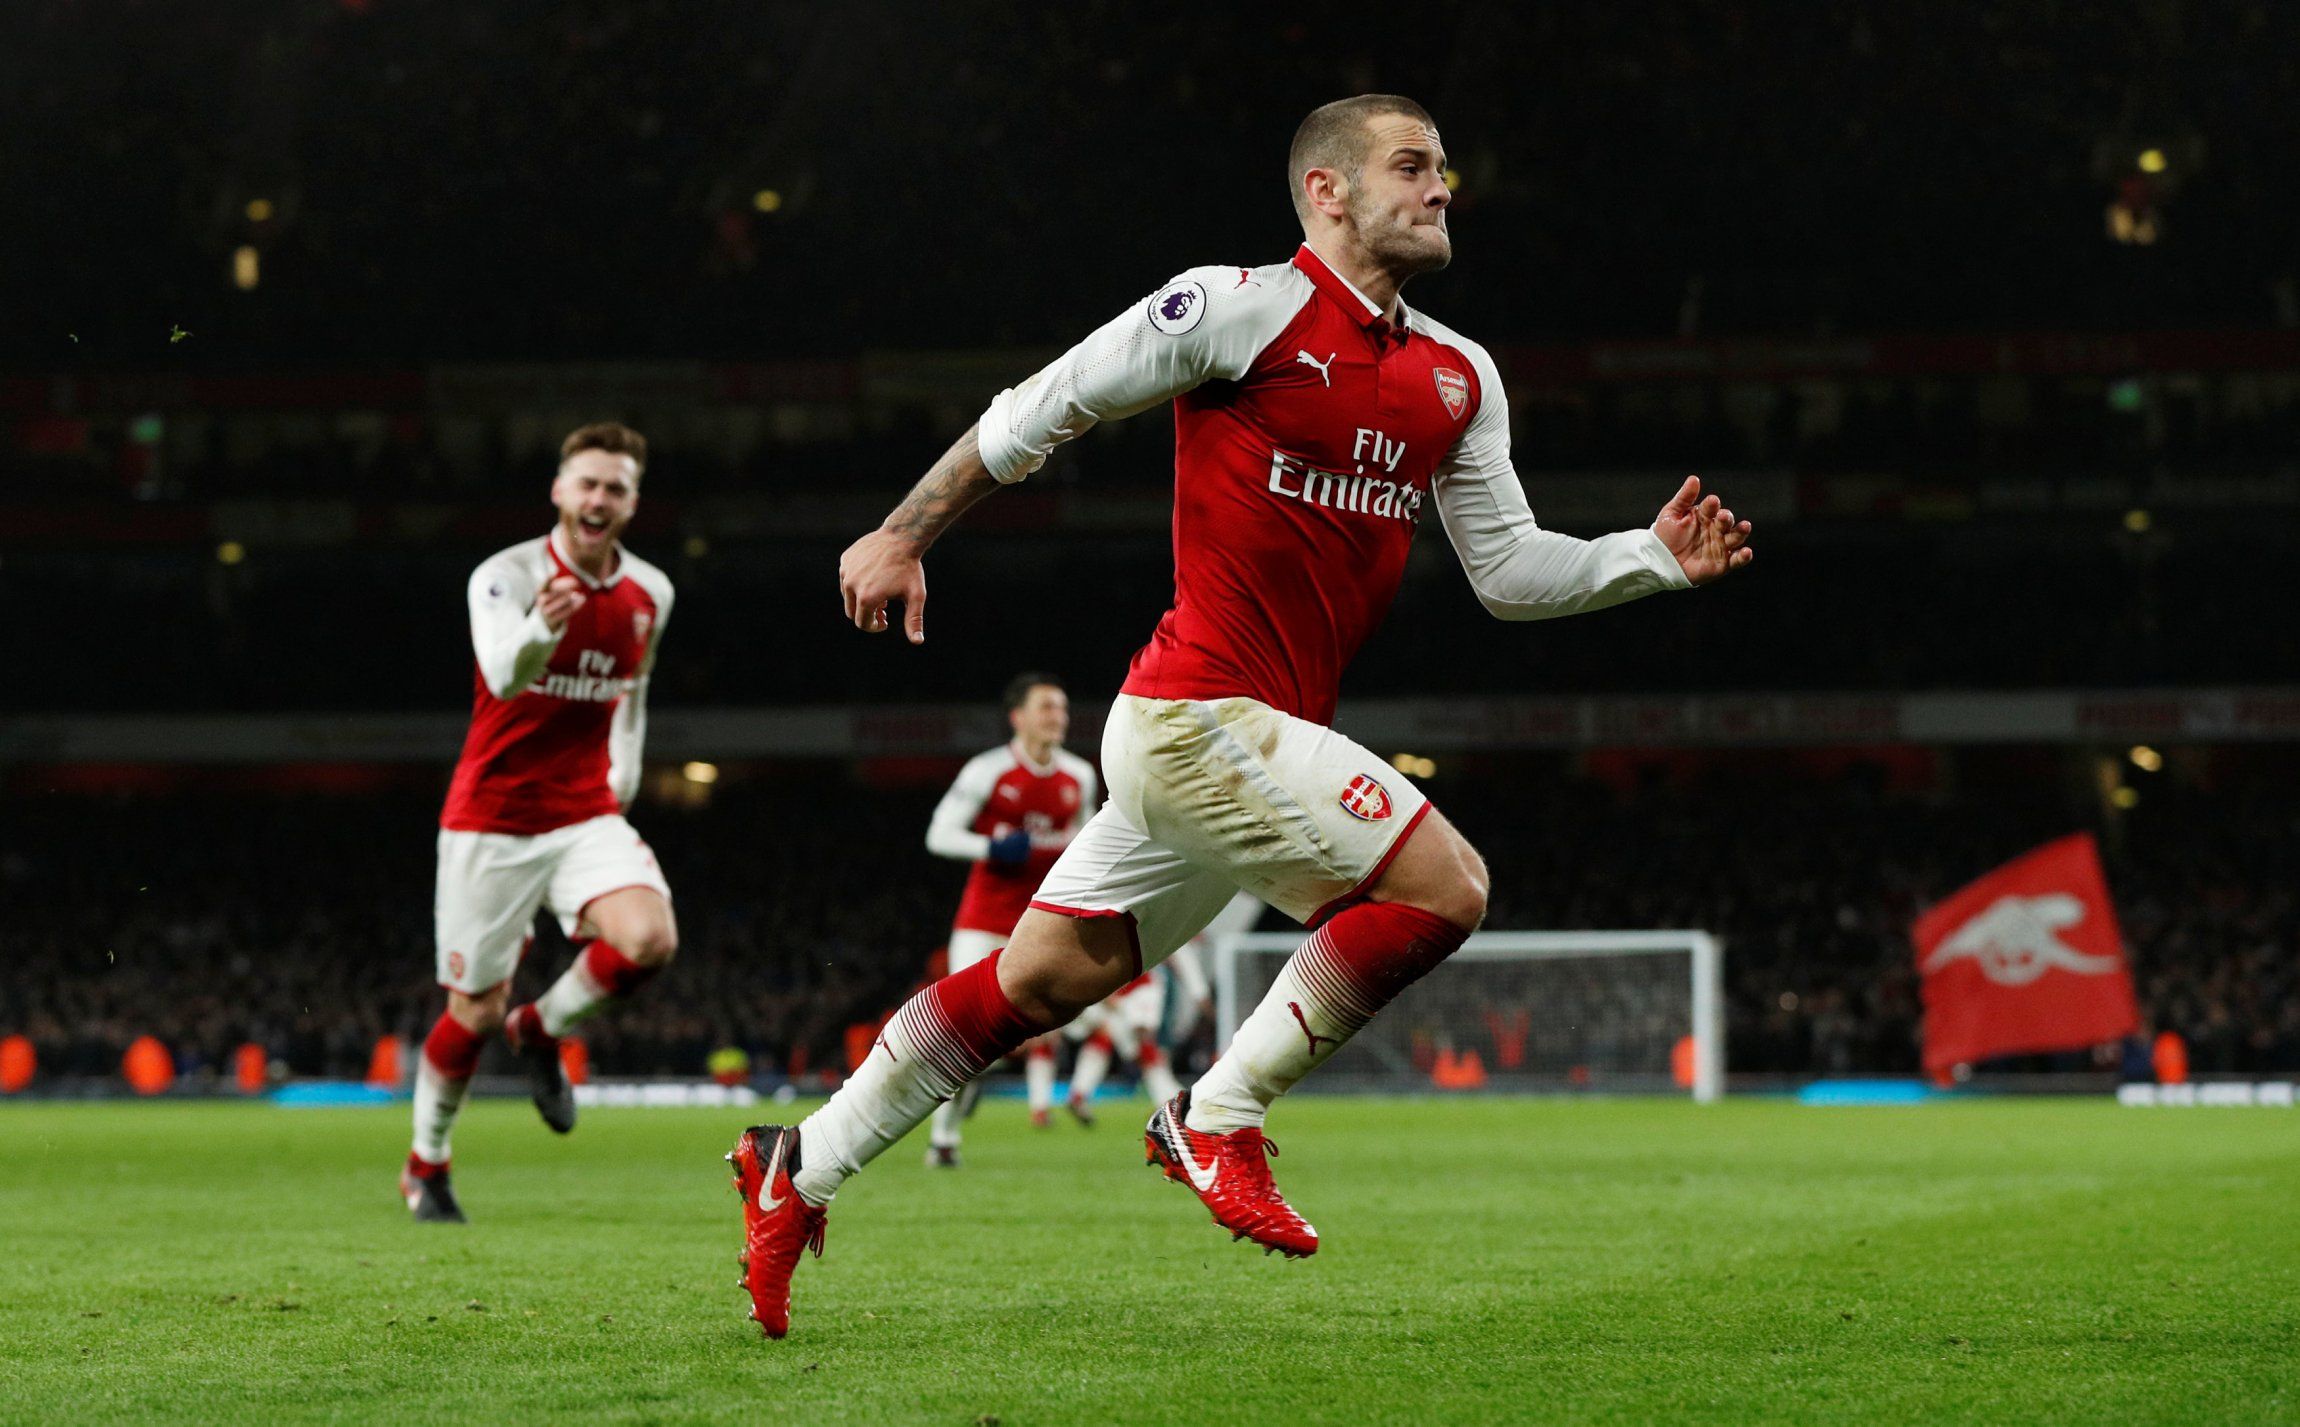 Jack Wilshere celebrates scoring for Arsenal